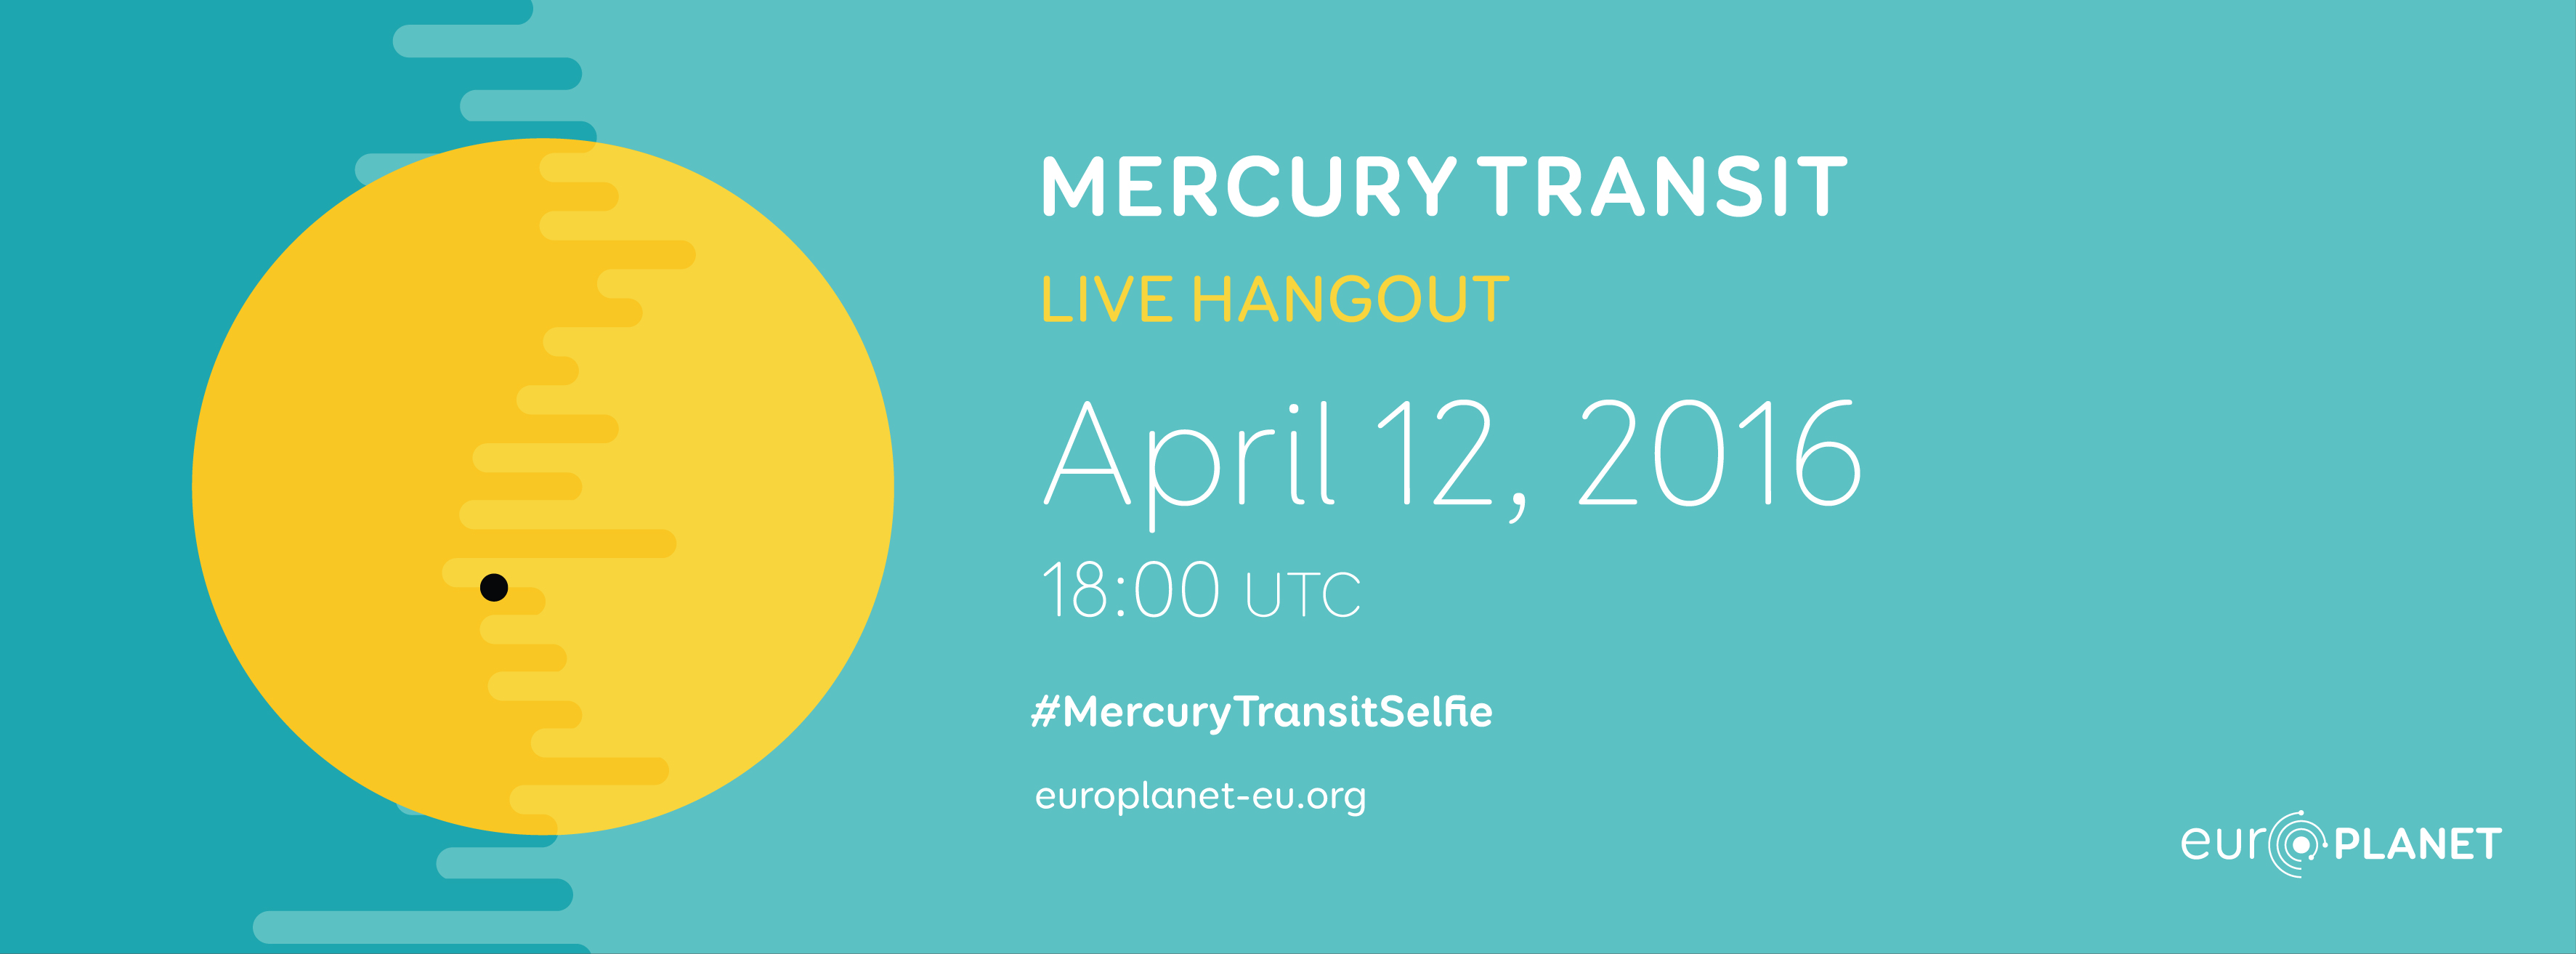 Mercury hangout 12 april